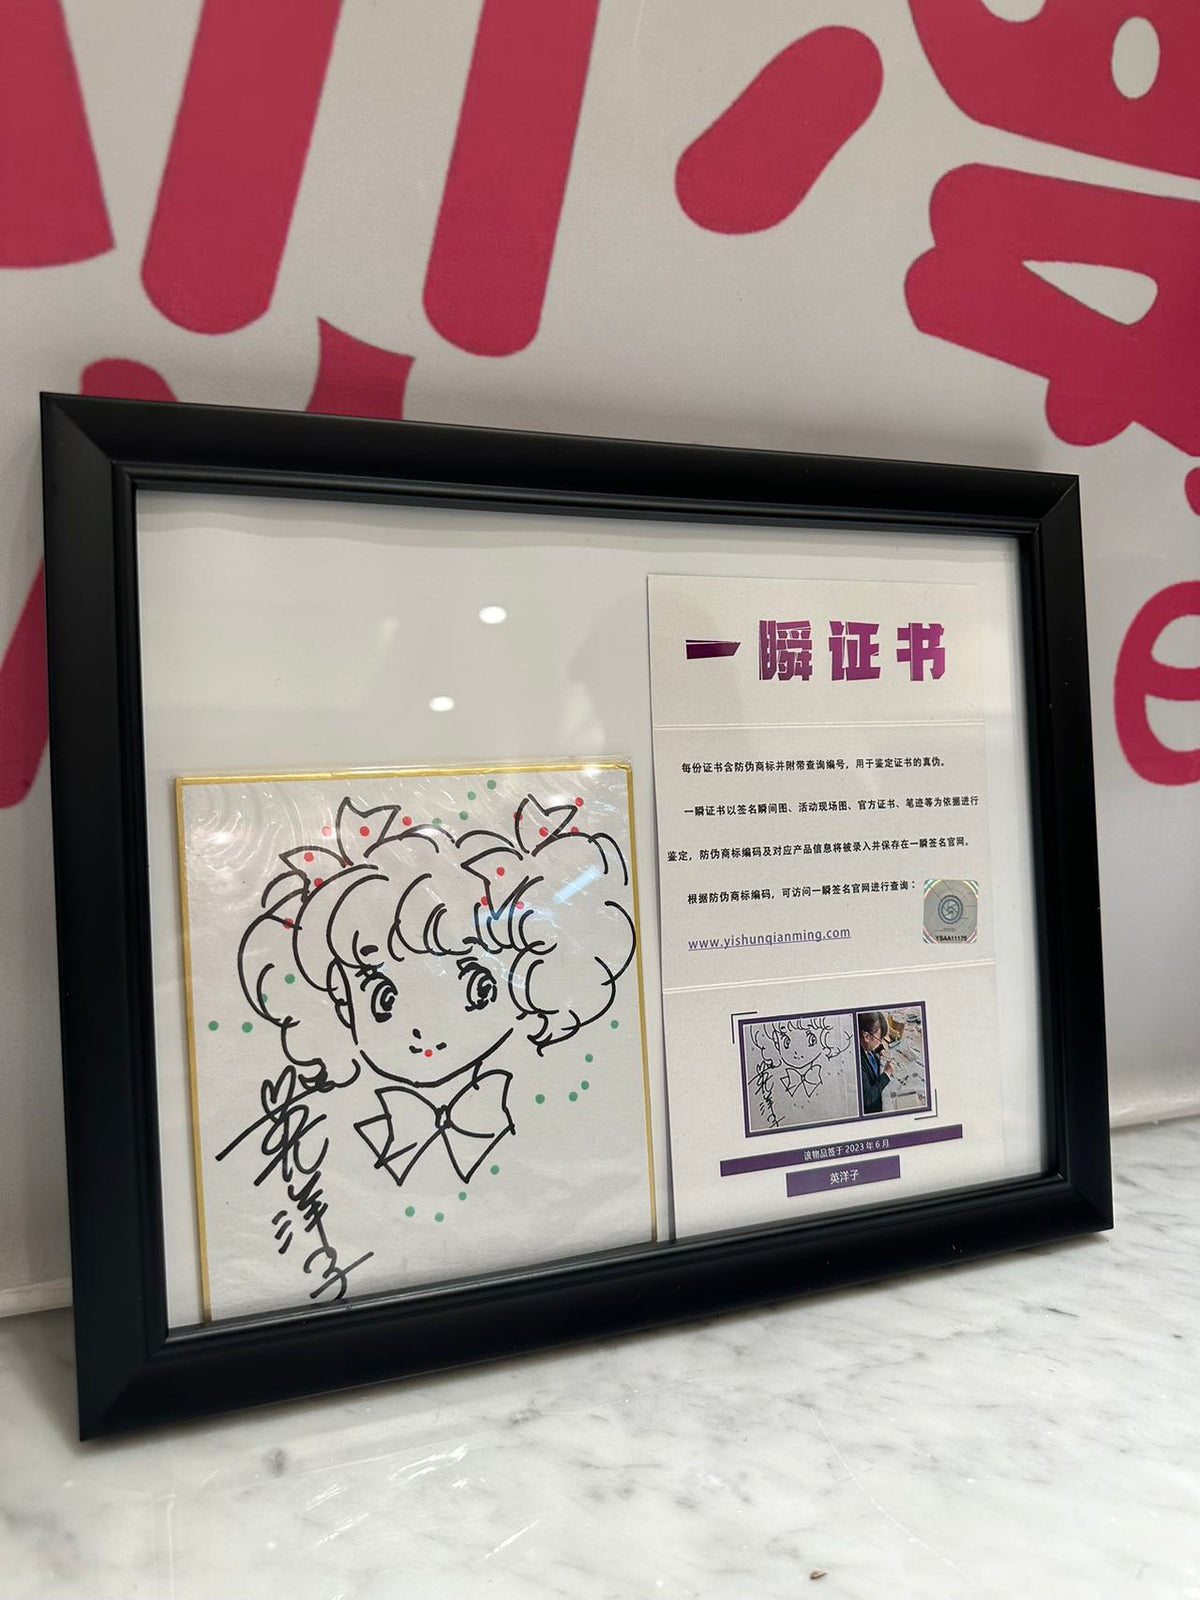 Yoko Hanabusa (Shojo Manga Artist) autograph and hand-drew protrait